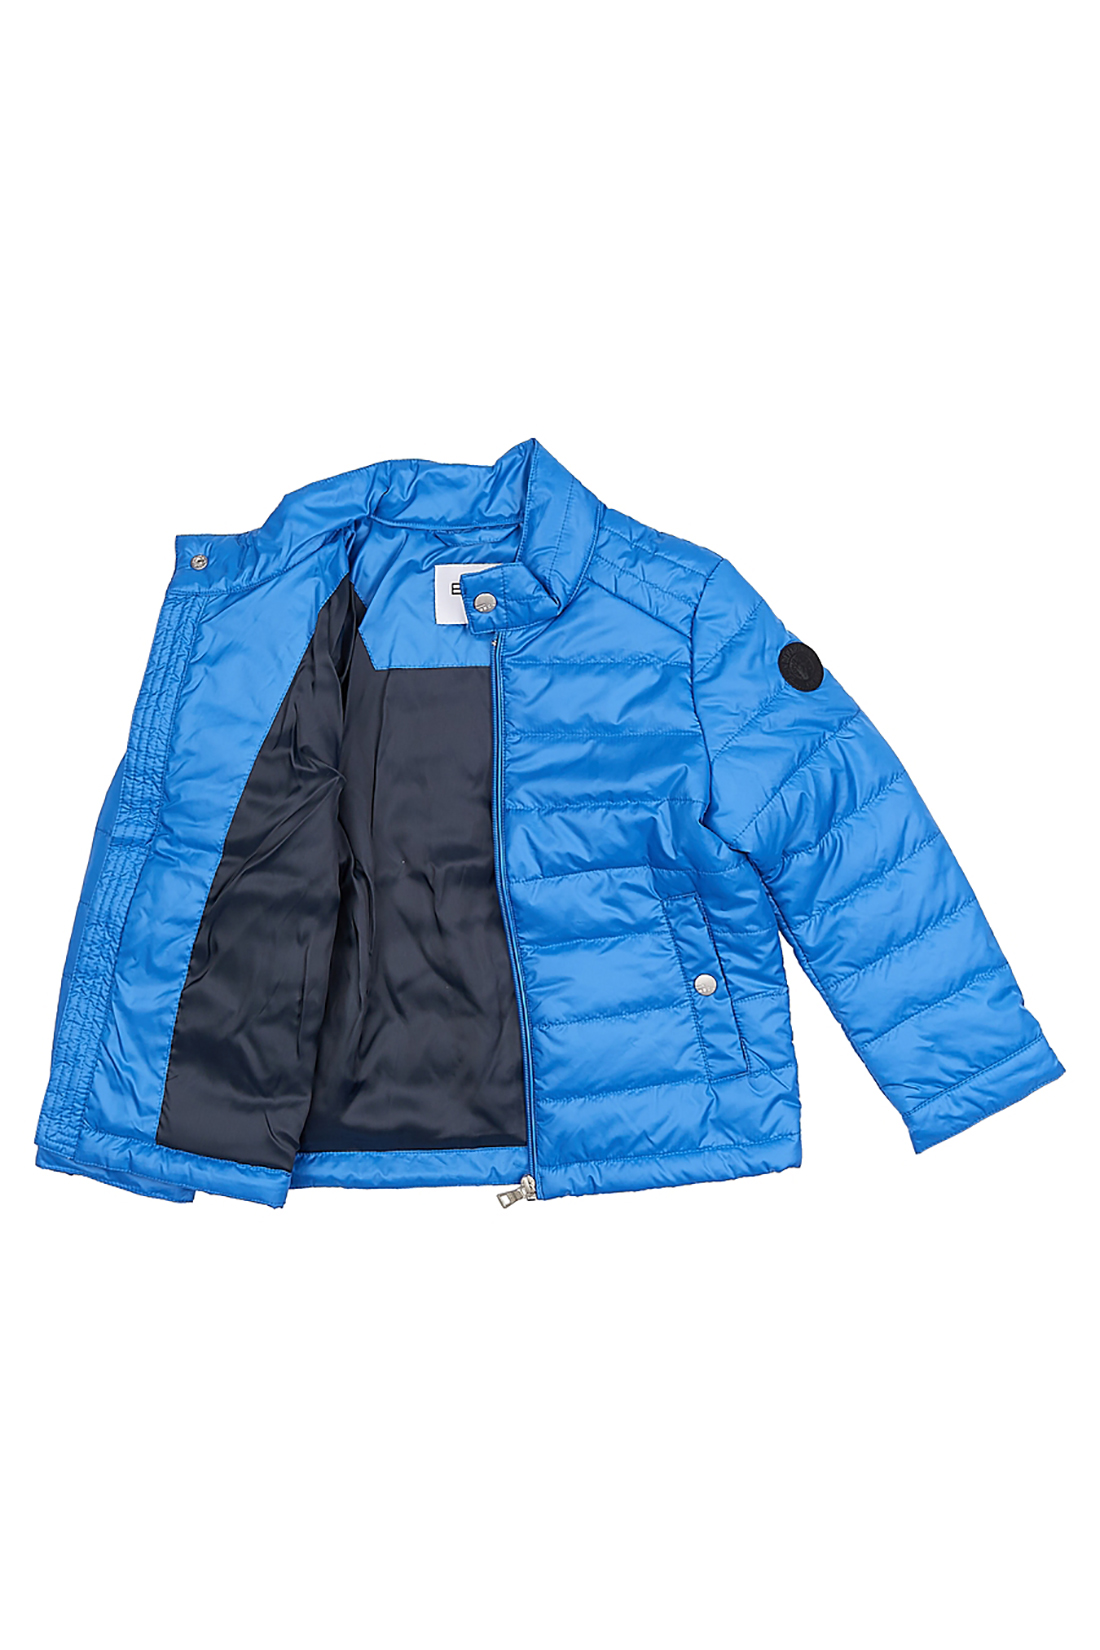 Куртка для мальчика (арт. baon BK538002), размер 122-128, цвет синий Куртка для мальчика (арт. baon BK538002) - фото 3